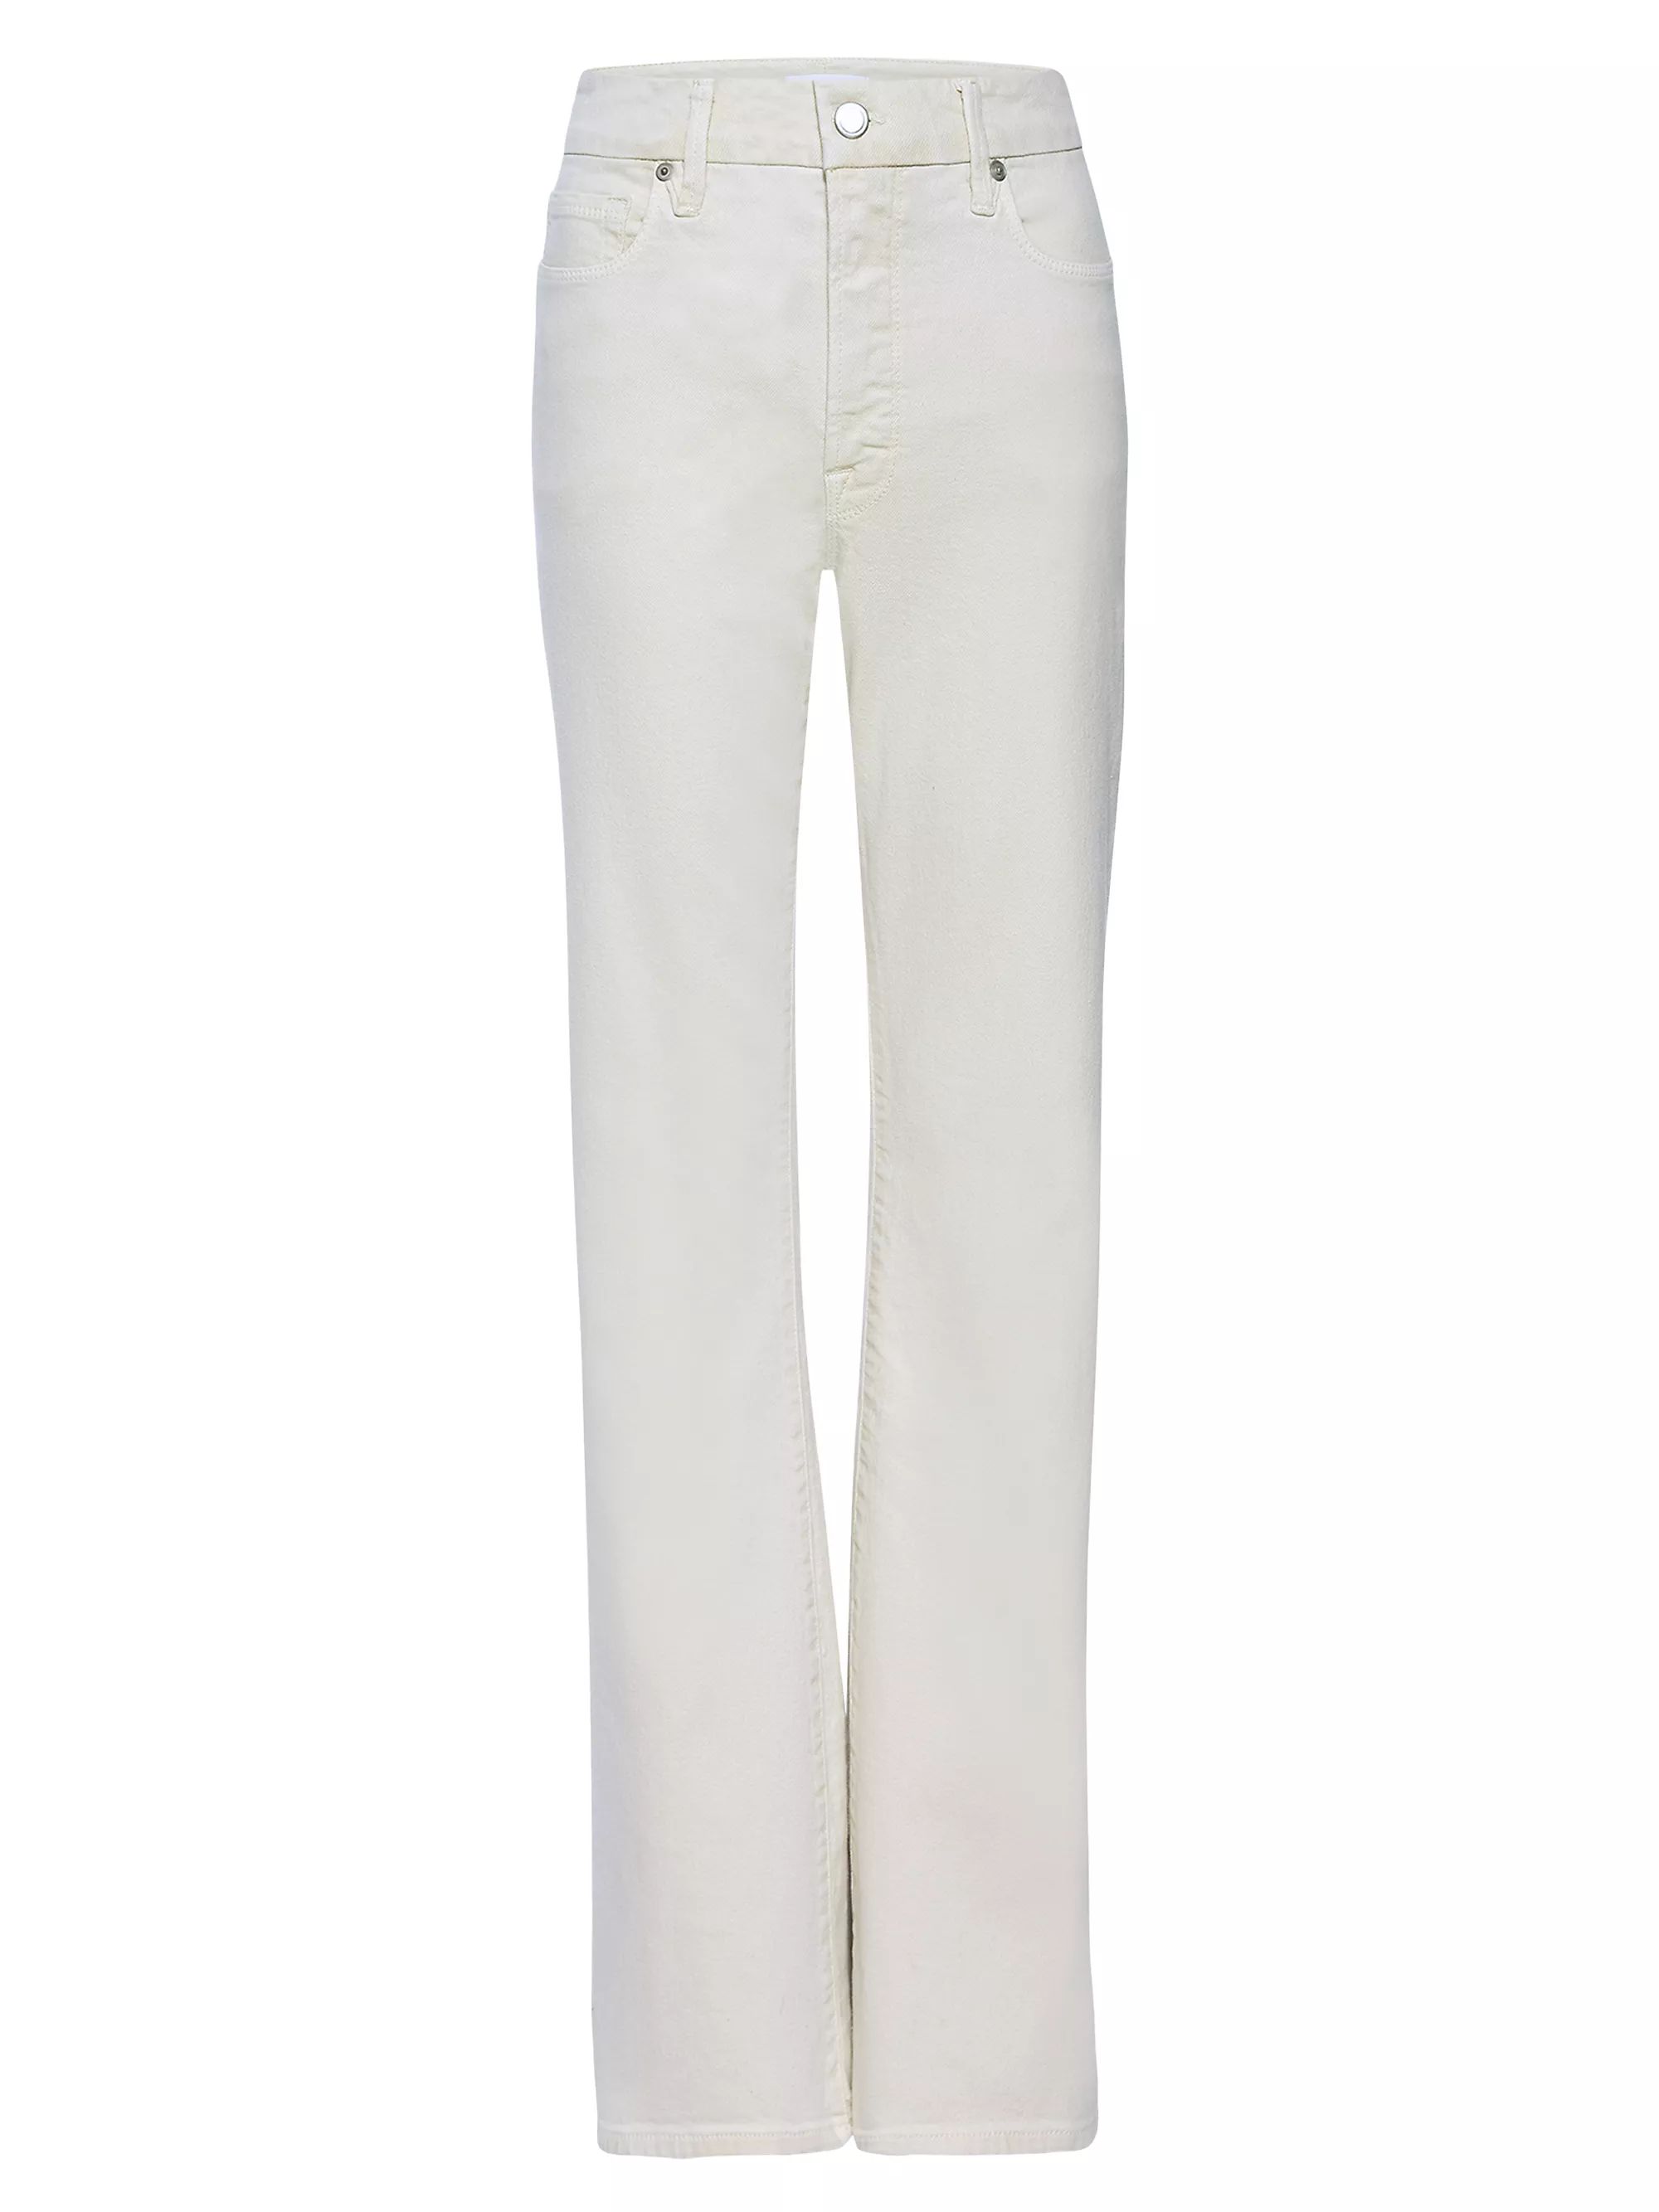 Good Classic Slim Boot-Cut Jeans | Saks Fifth Avenue